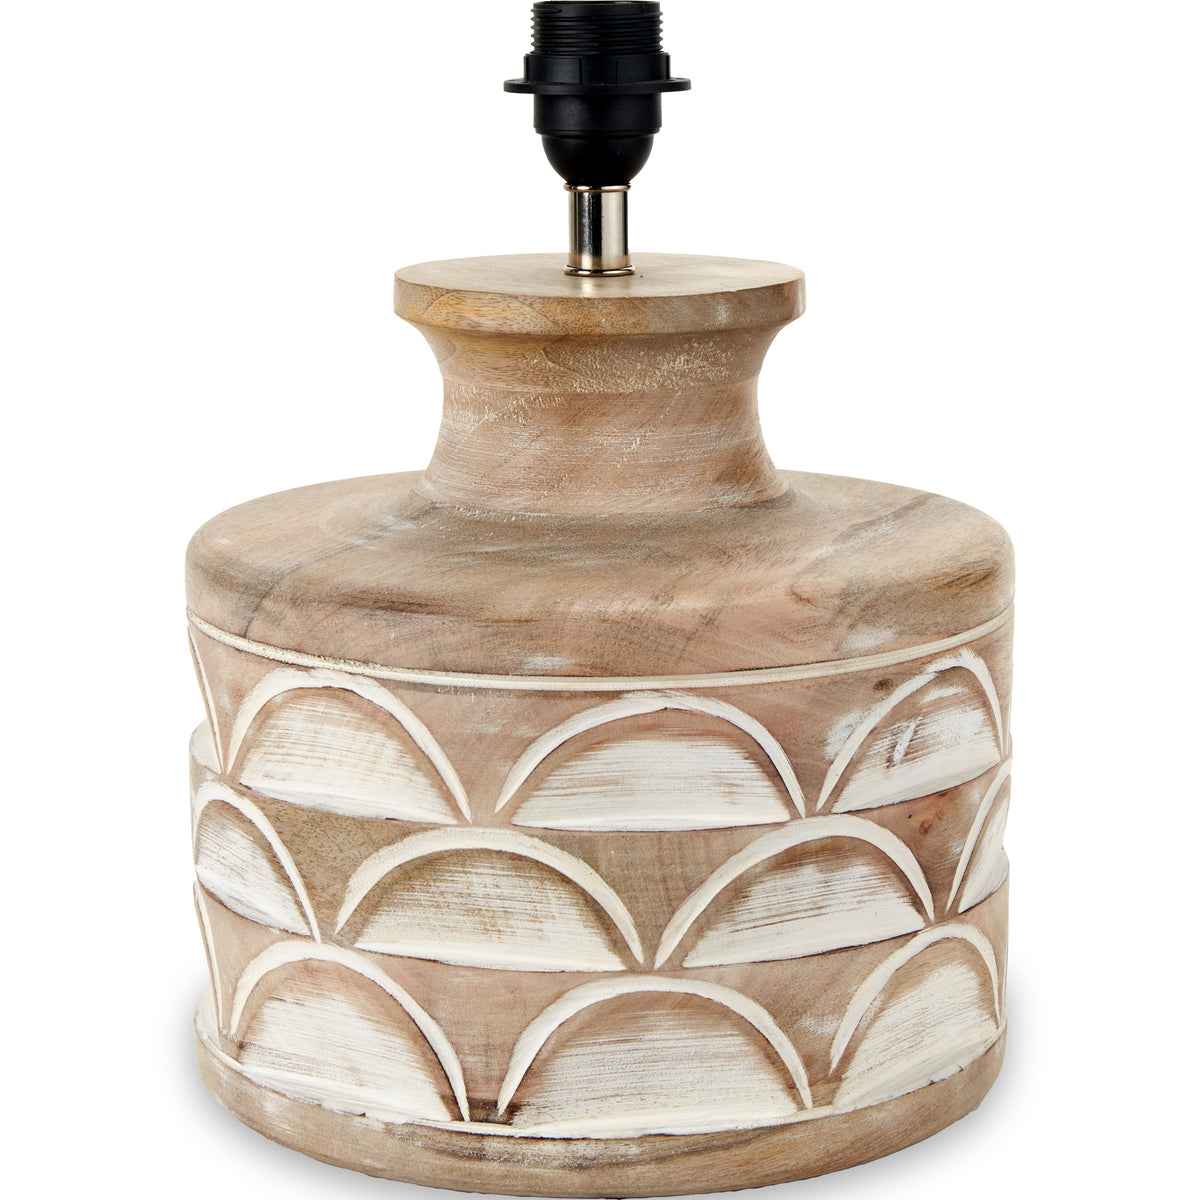 Kingsbury White Wash Large Carved Wood Table Lamp